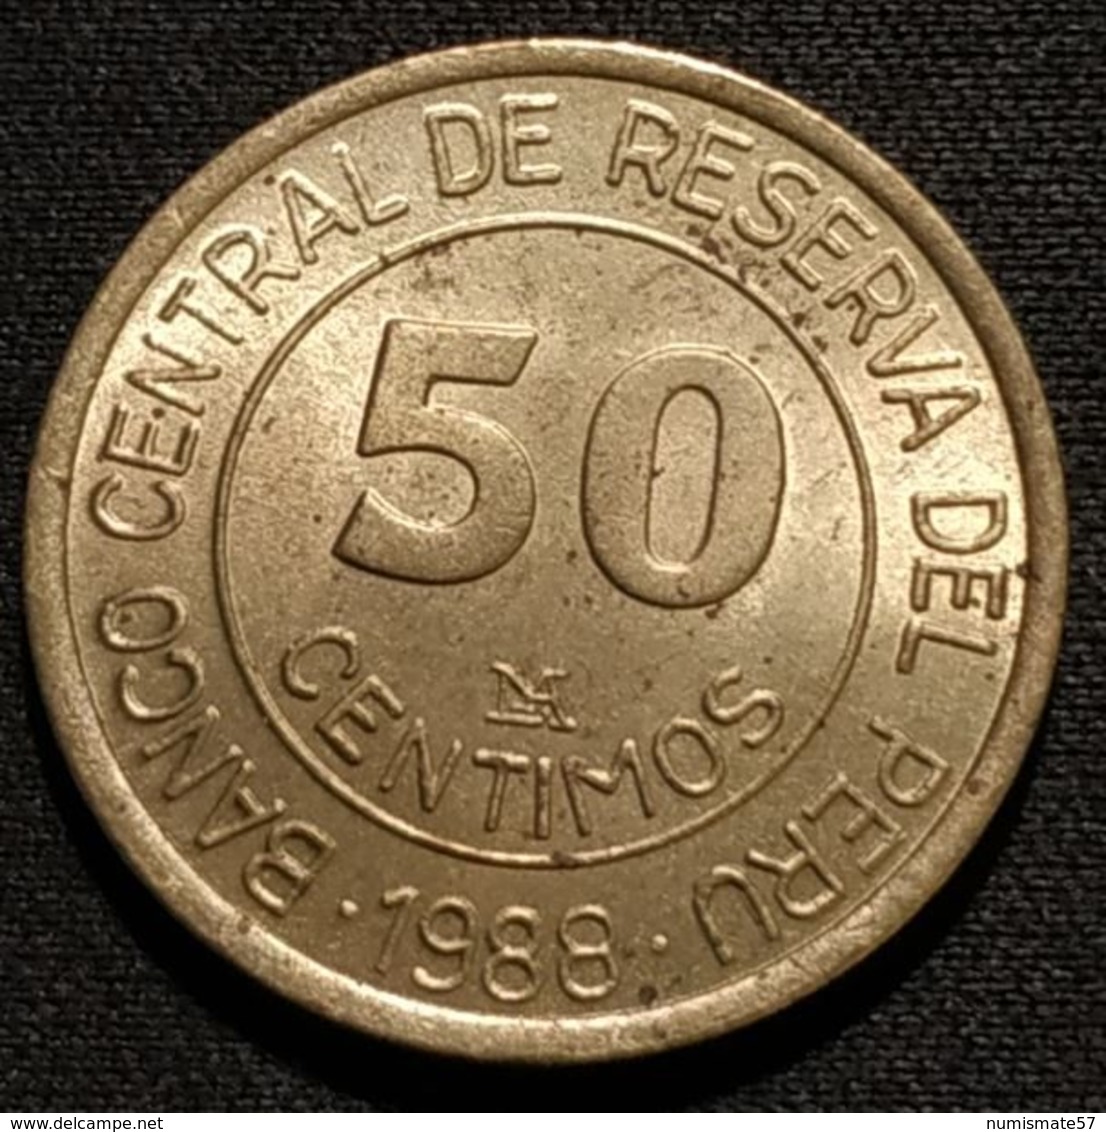 PEROU - PERU - 50 CENTIMOS 1988 - KM 295 - Peru